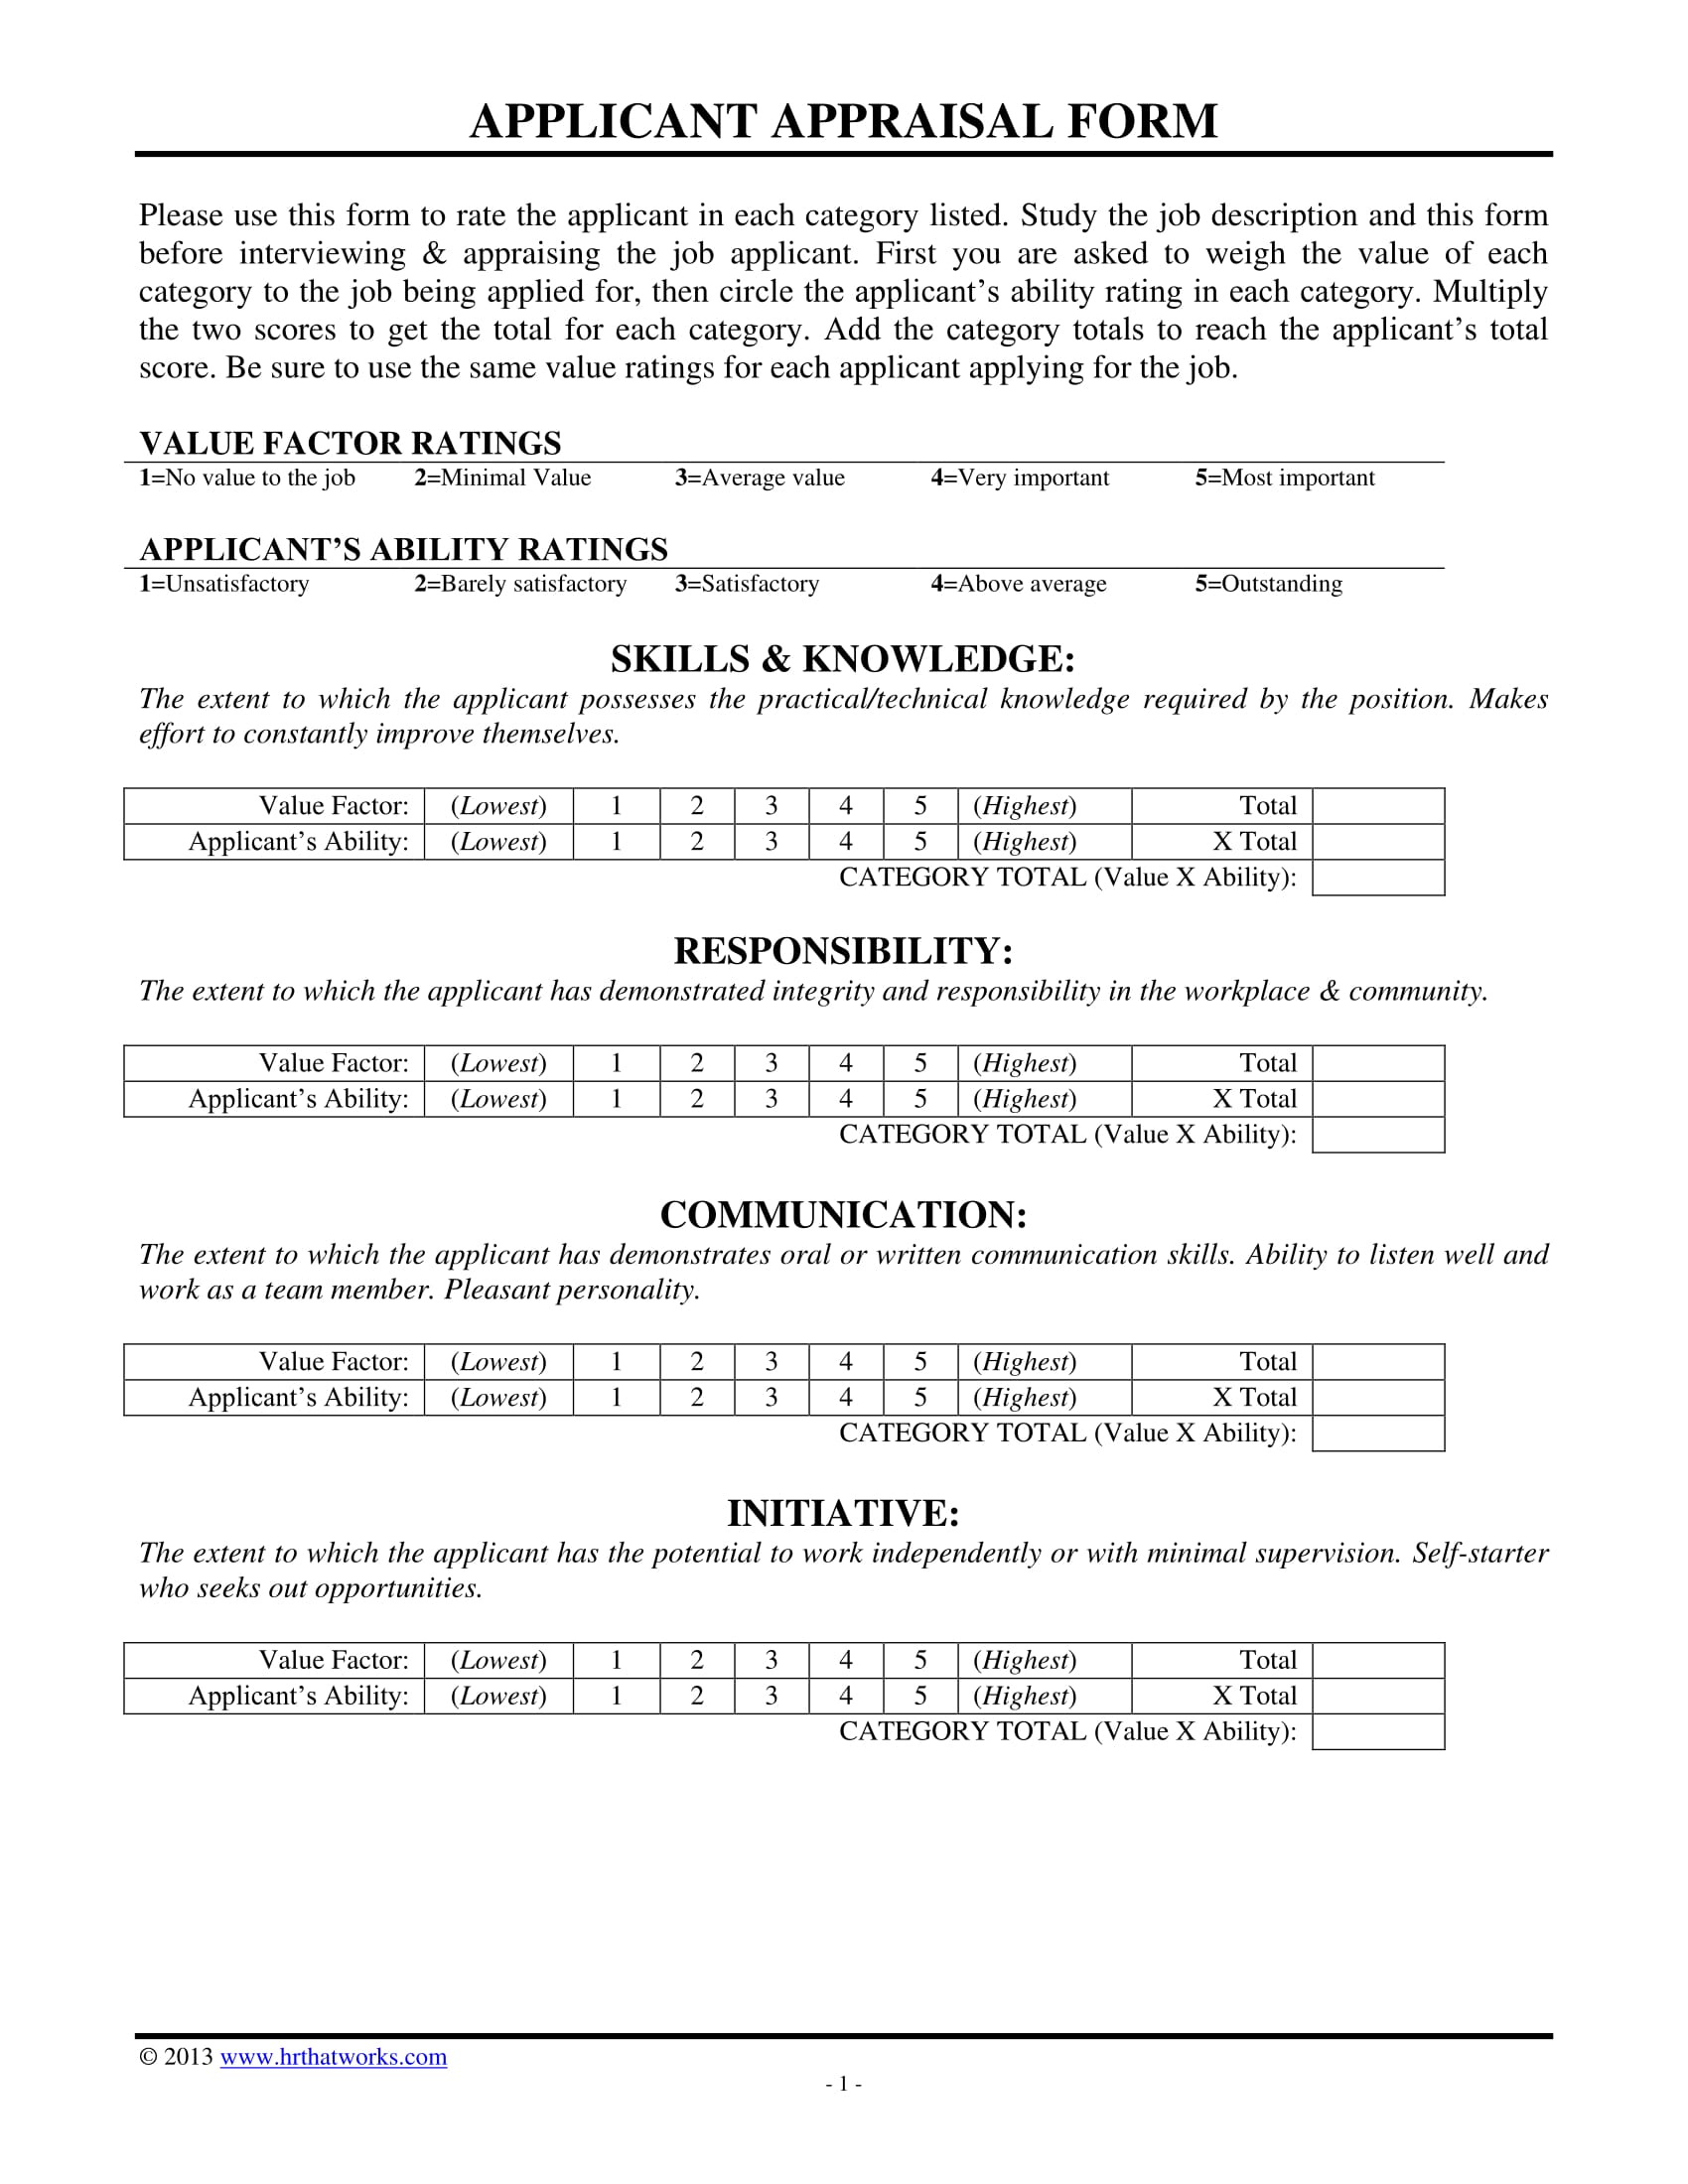 applicant appraisal form sample 12